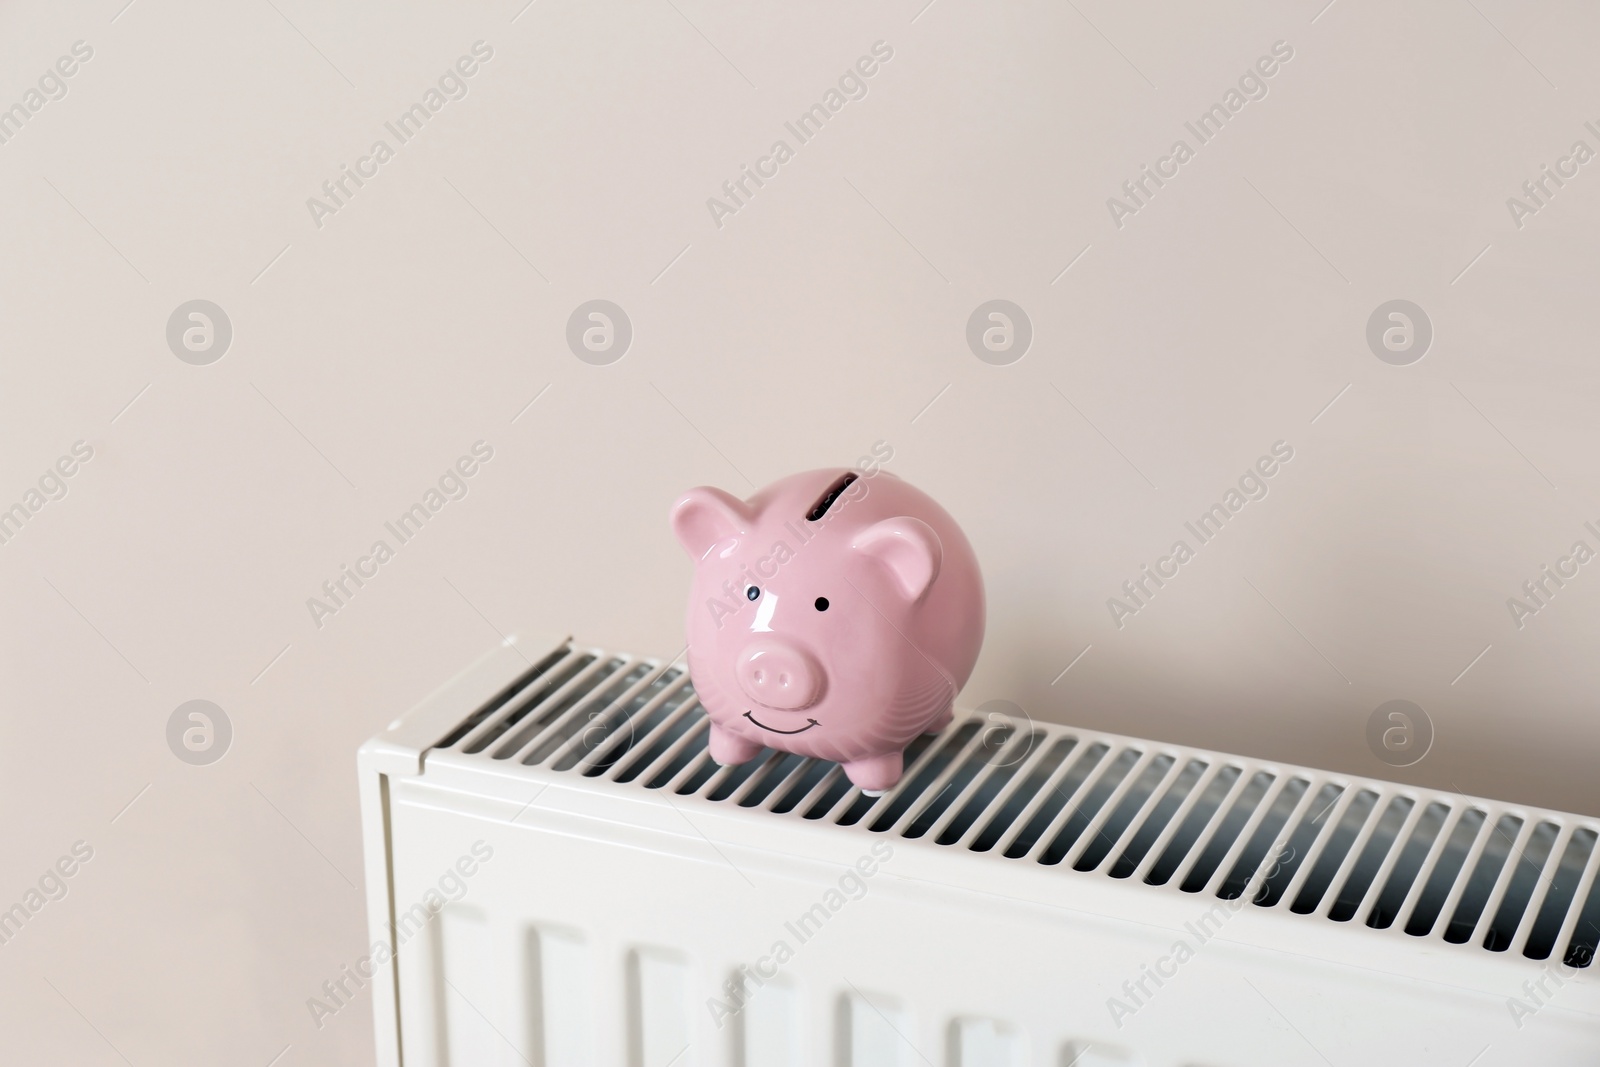 Photo of Piggy bank on heating radiator against light background